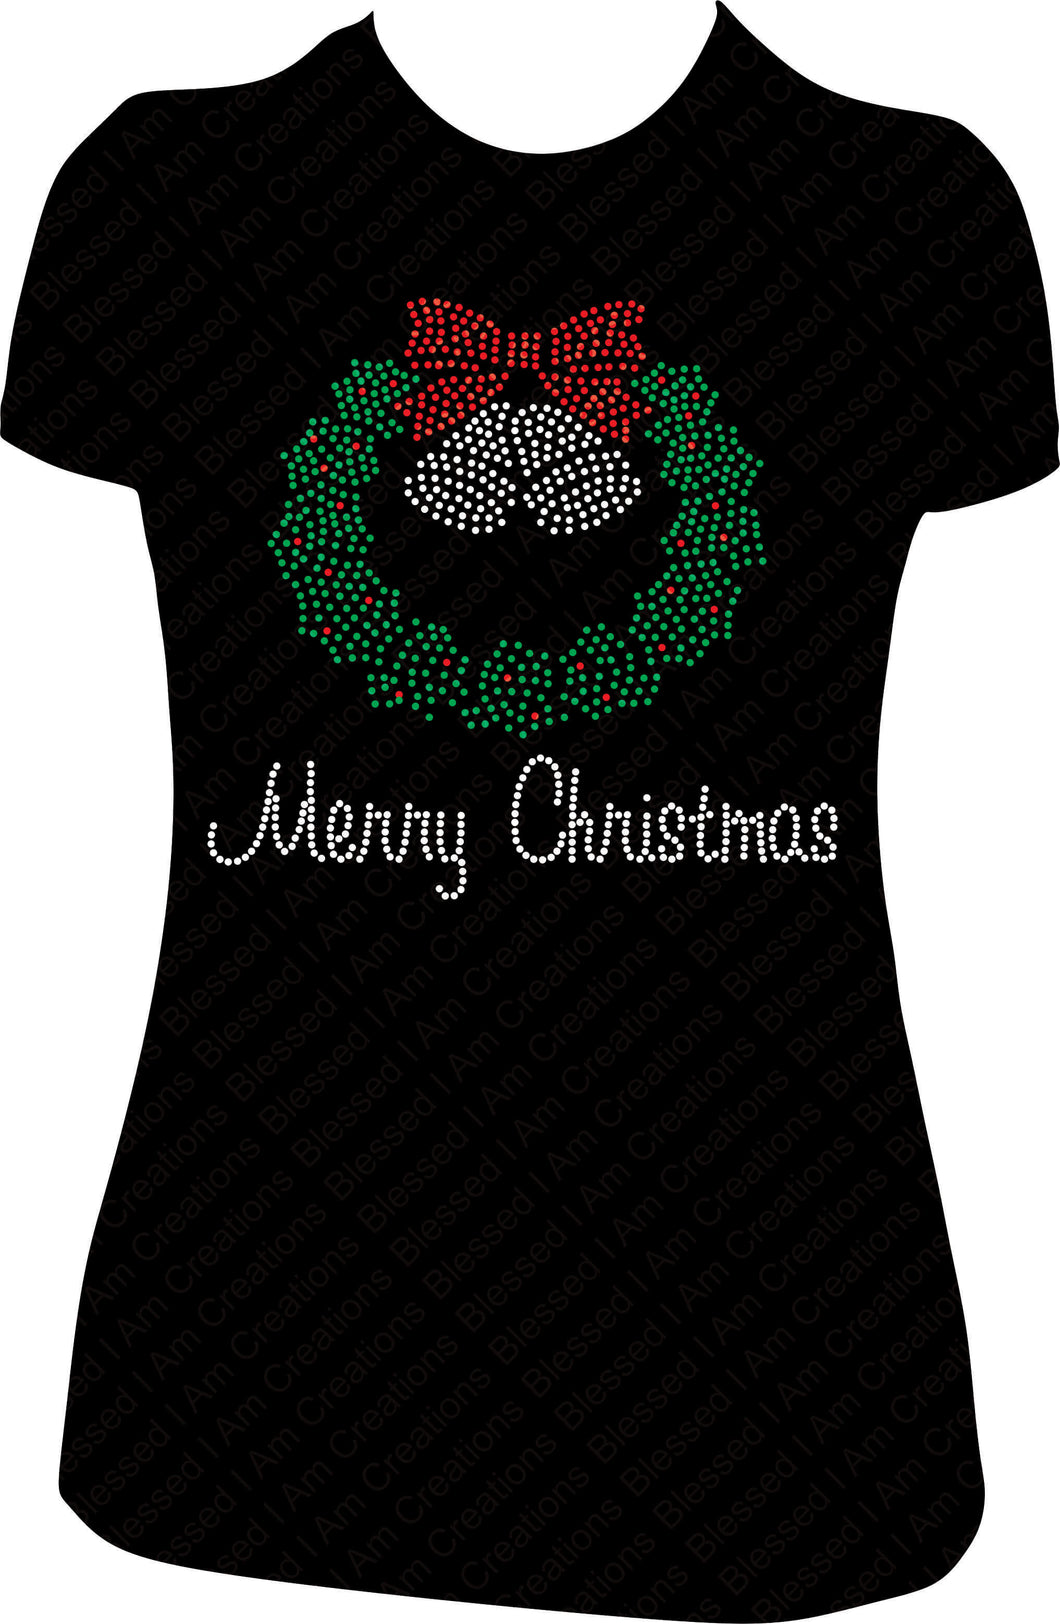 Merry Christmas Wreath Rhinestone Shirt